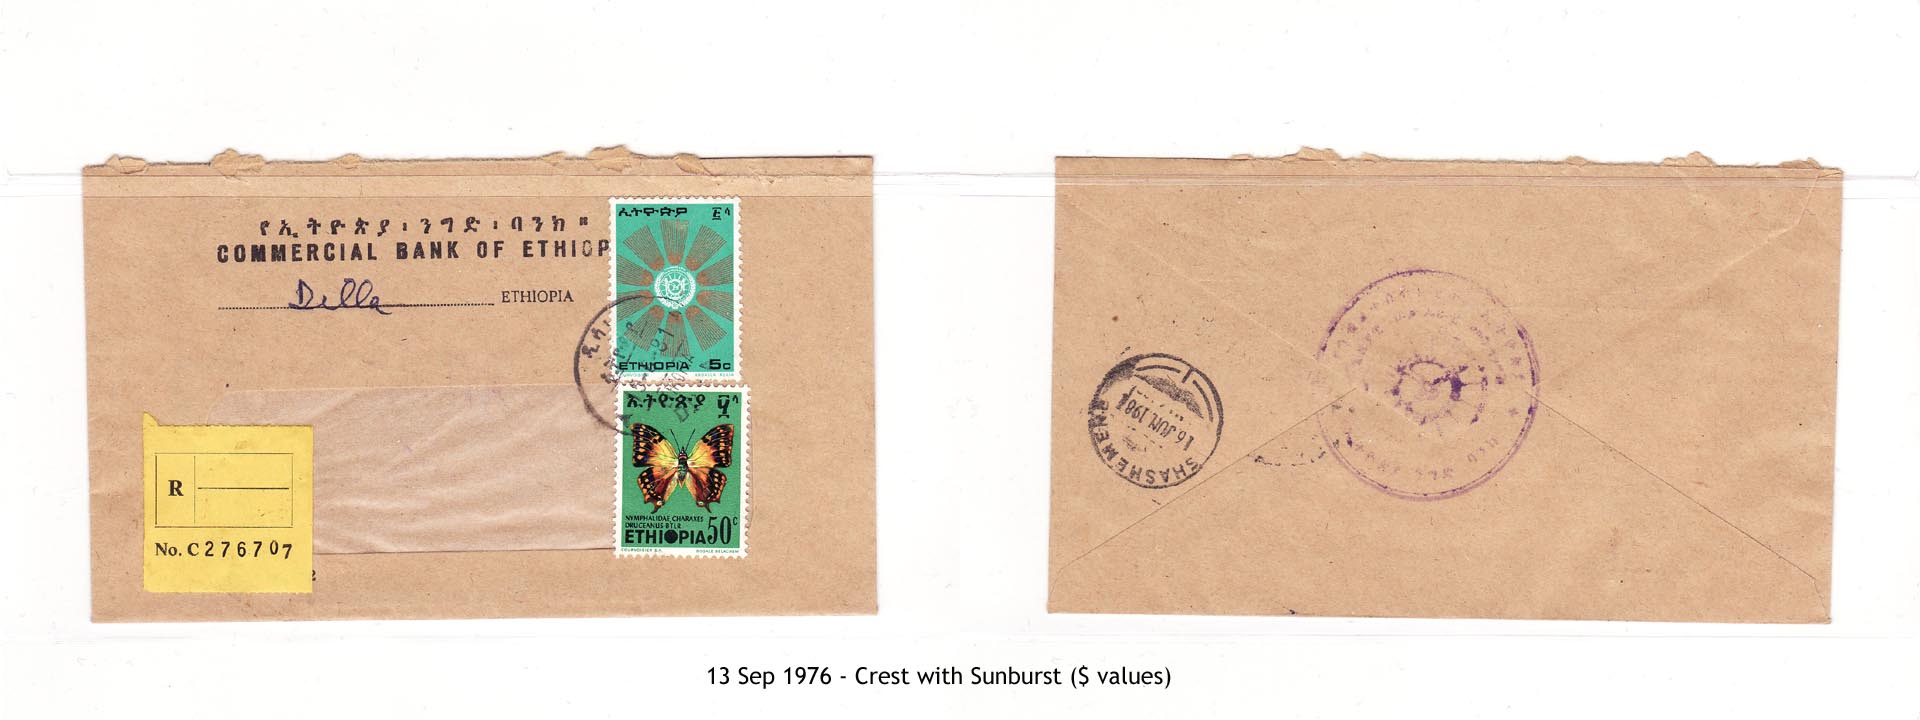 19760913 - Crest with Sunburst ($ values)